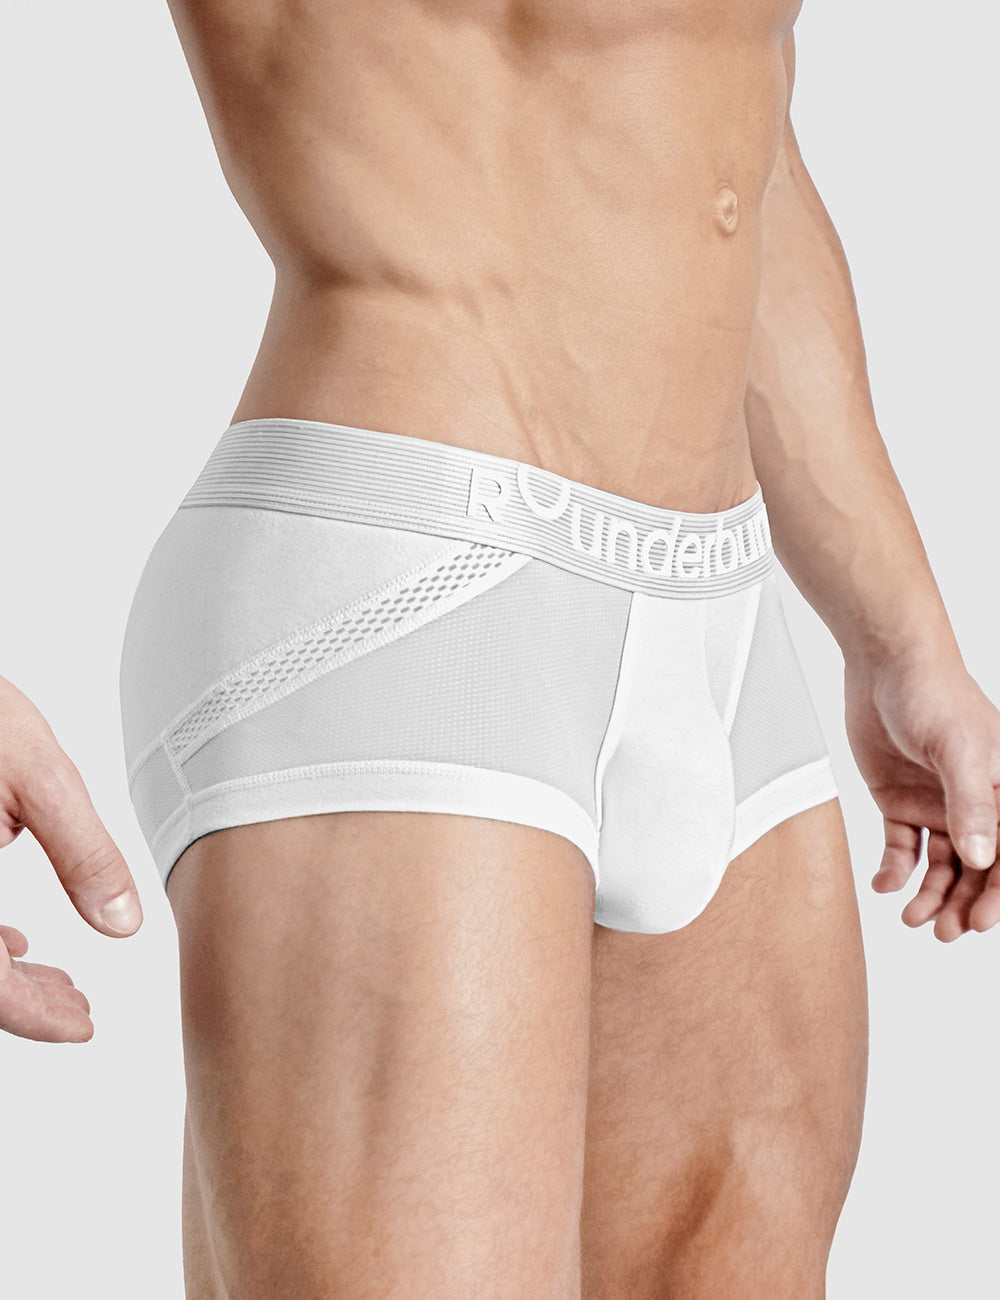 Rounderbum Anatomic Mini Trunk - Underwear Expert